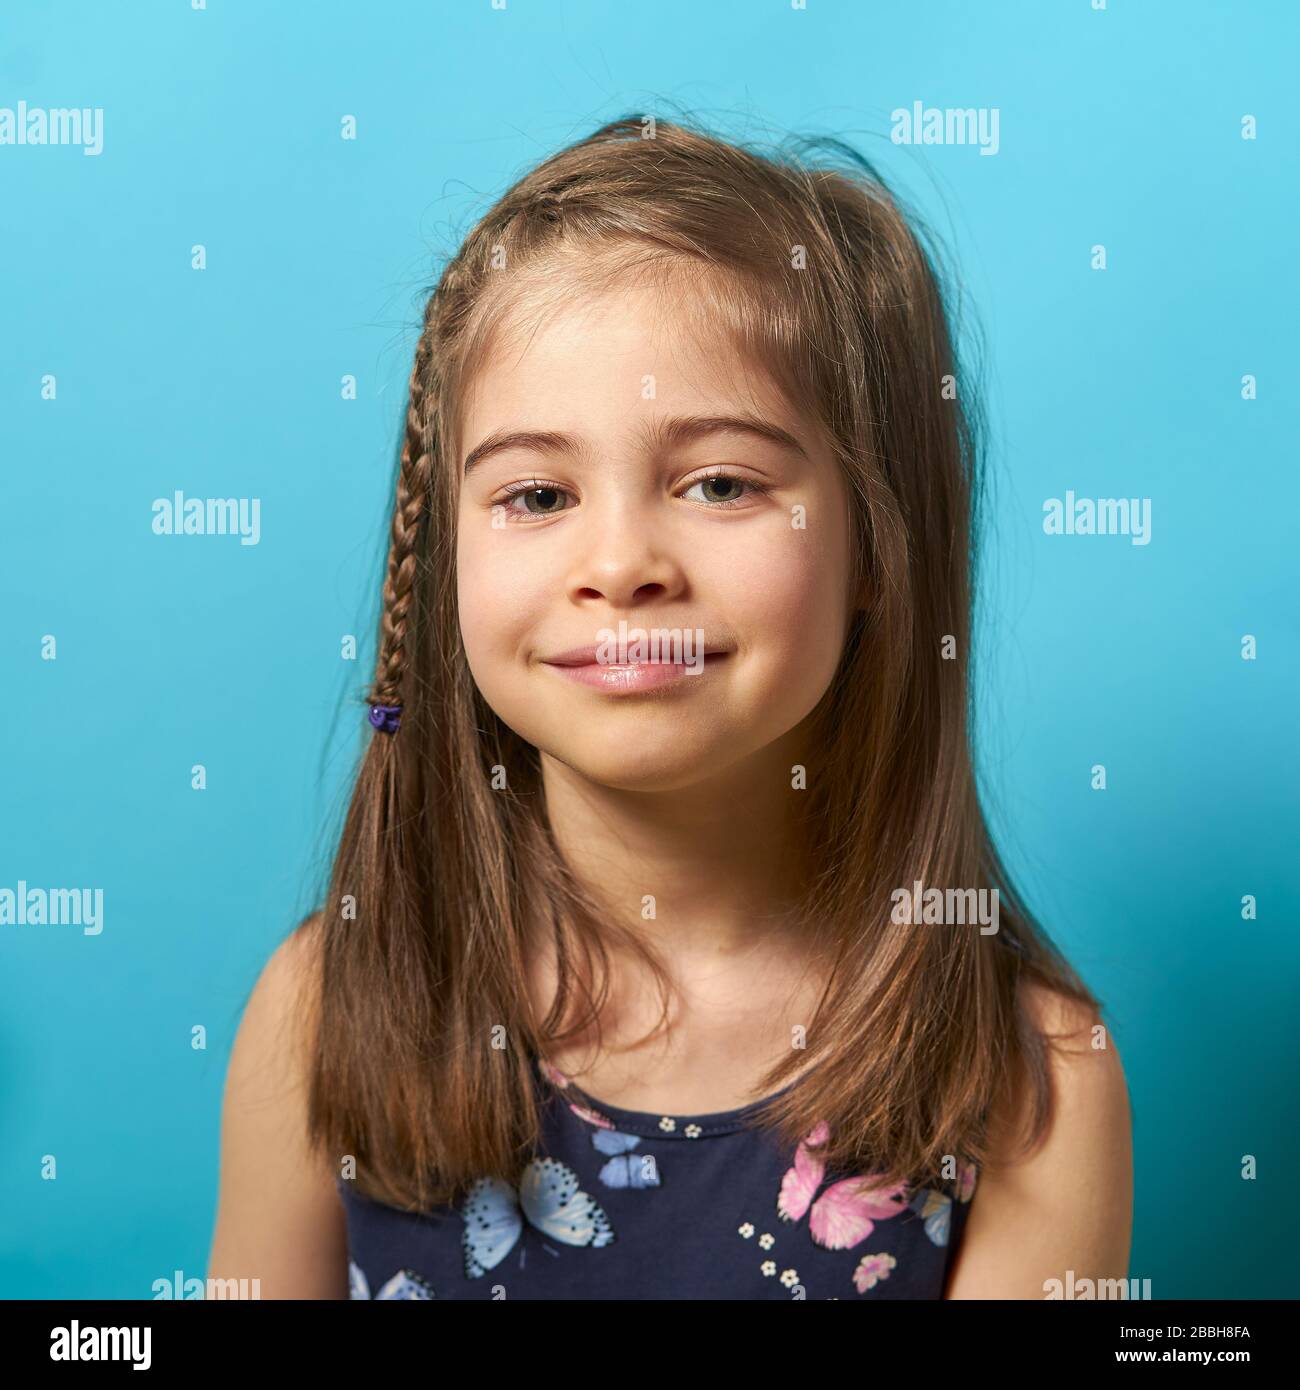 little girl in dress on blue background Stock Photo